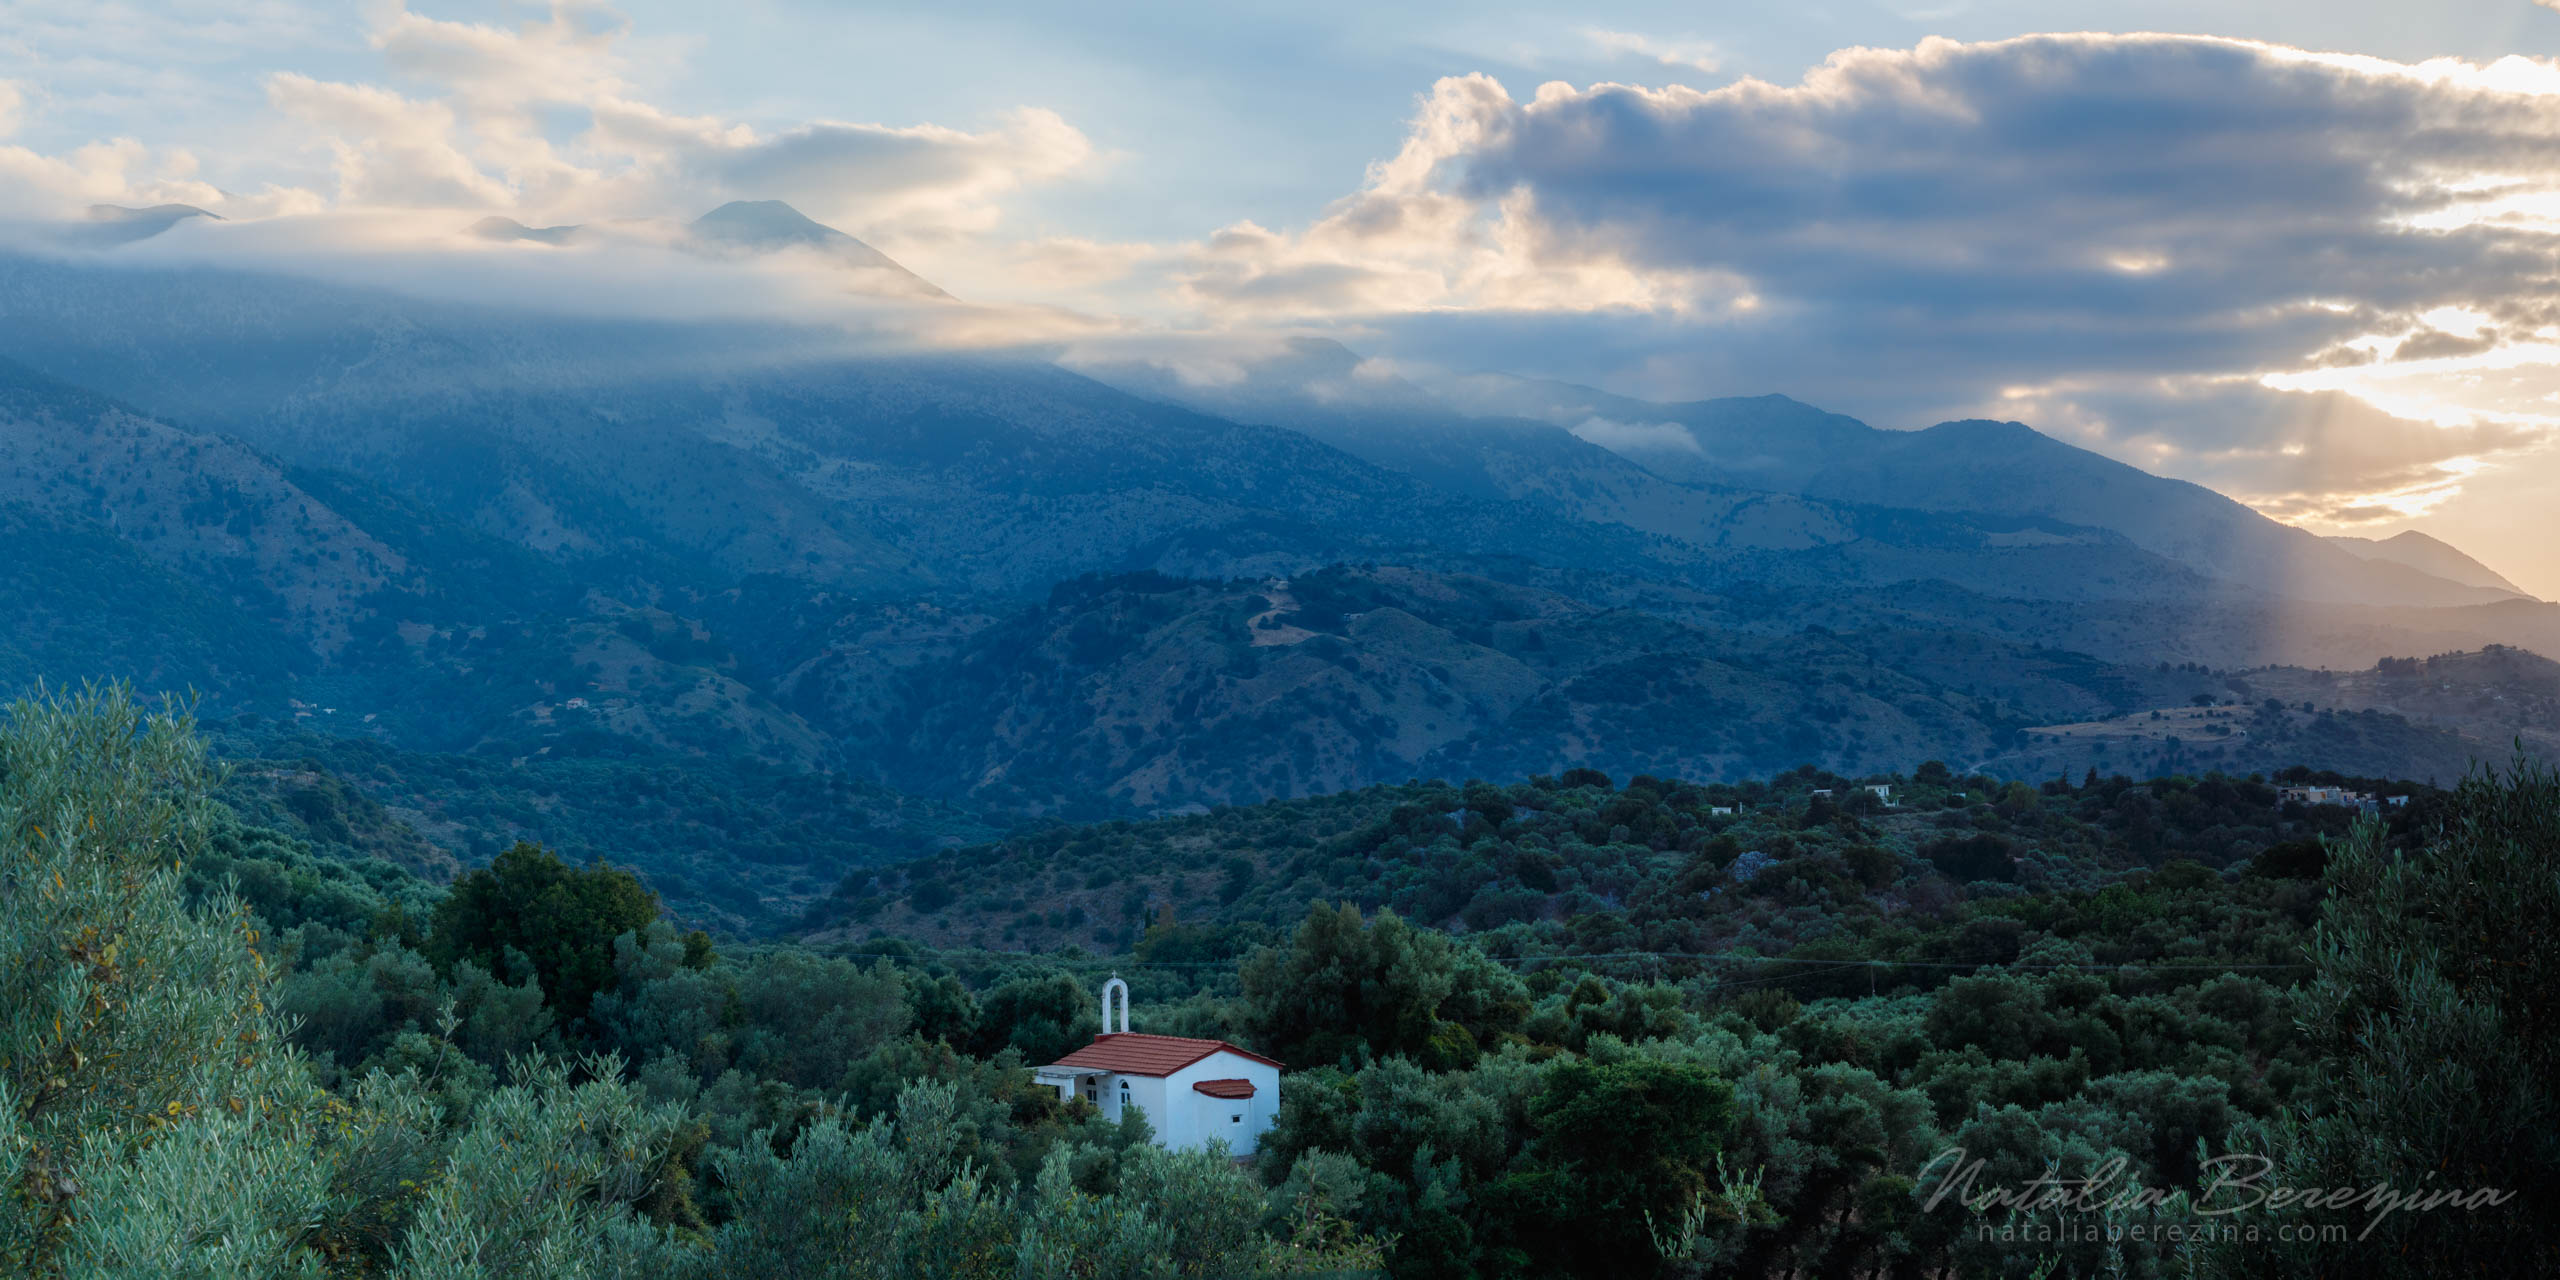 Greece, Crete, landscape, cloud, sunset, sunlight, church, 2x1 CR1-NB7B6A8609-P - Crete, Greece - Natalia Berezina Photography